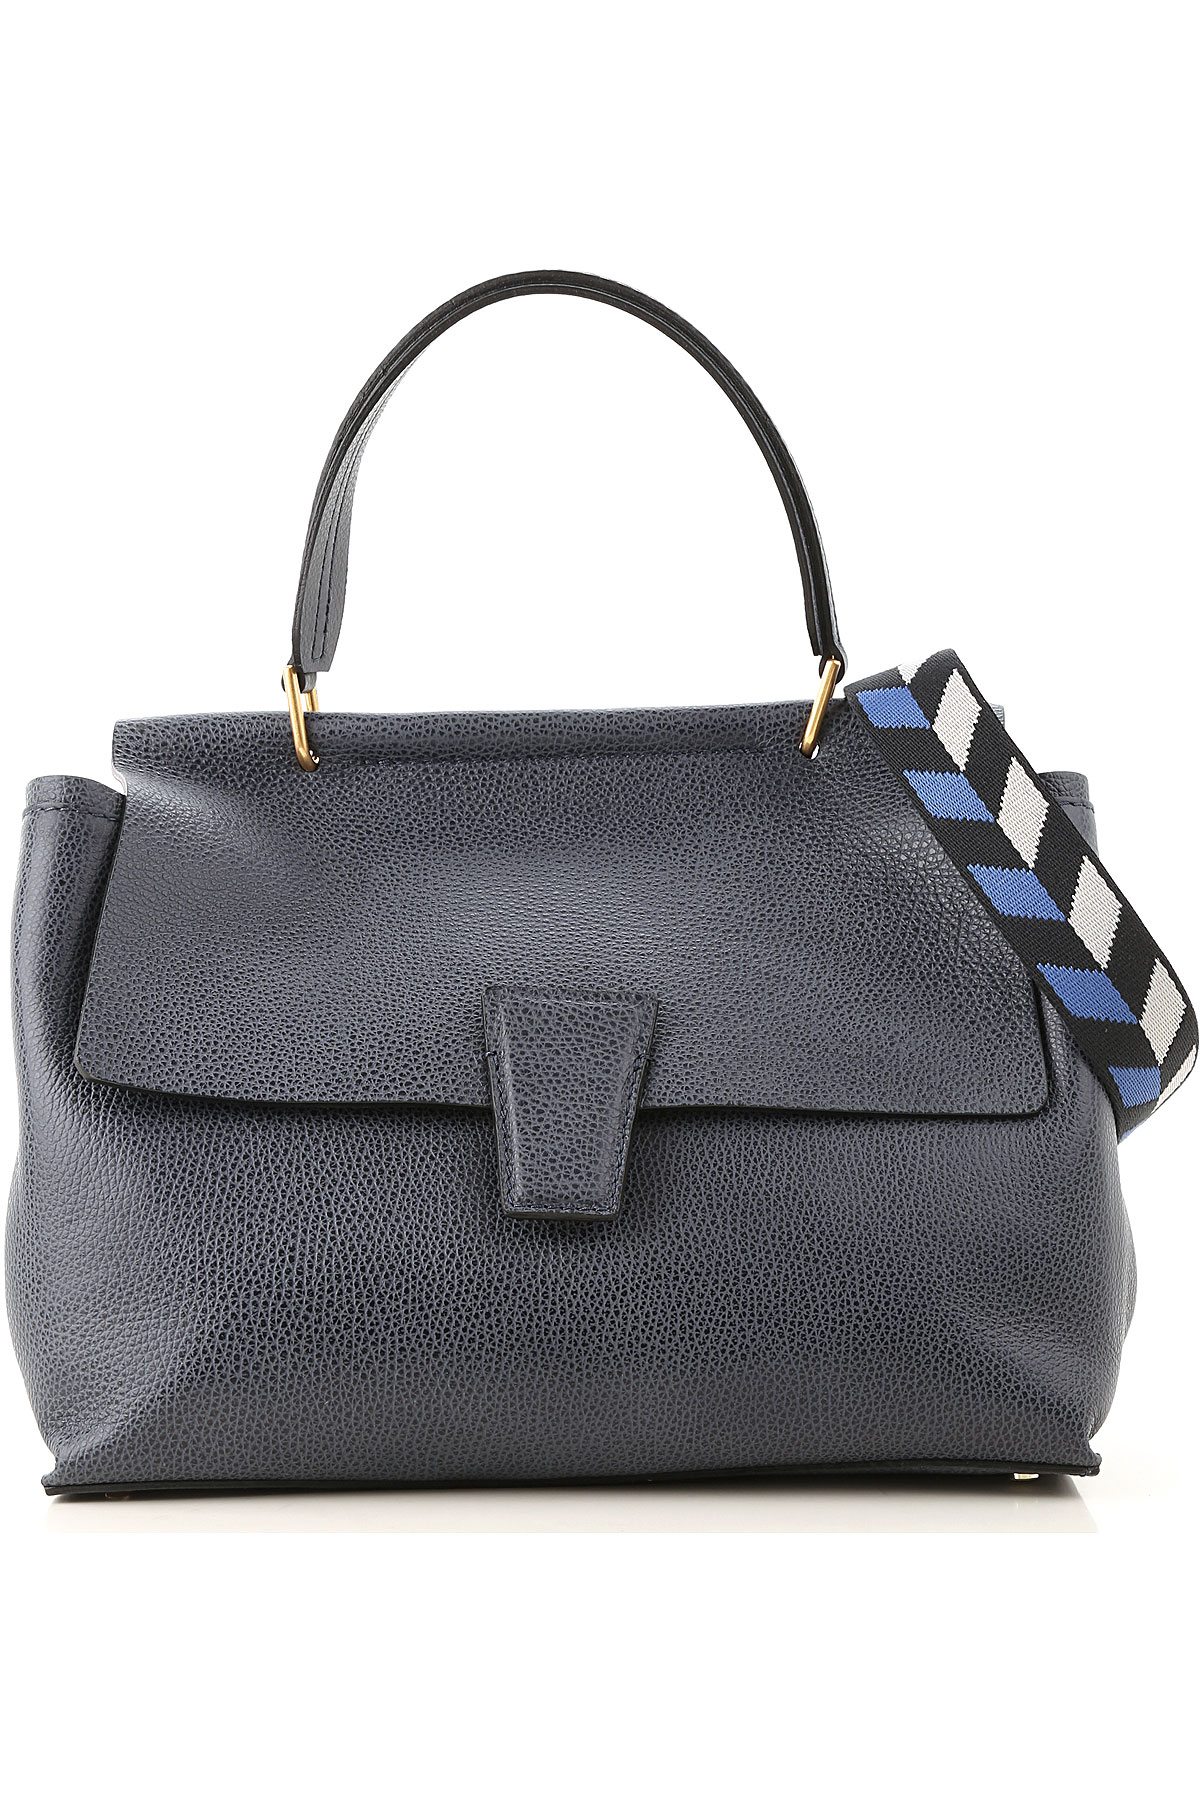 Handbags Gianni Chiarini, Style code: 6352--